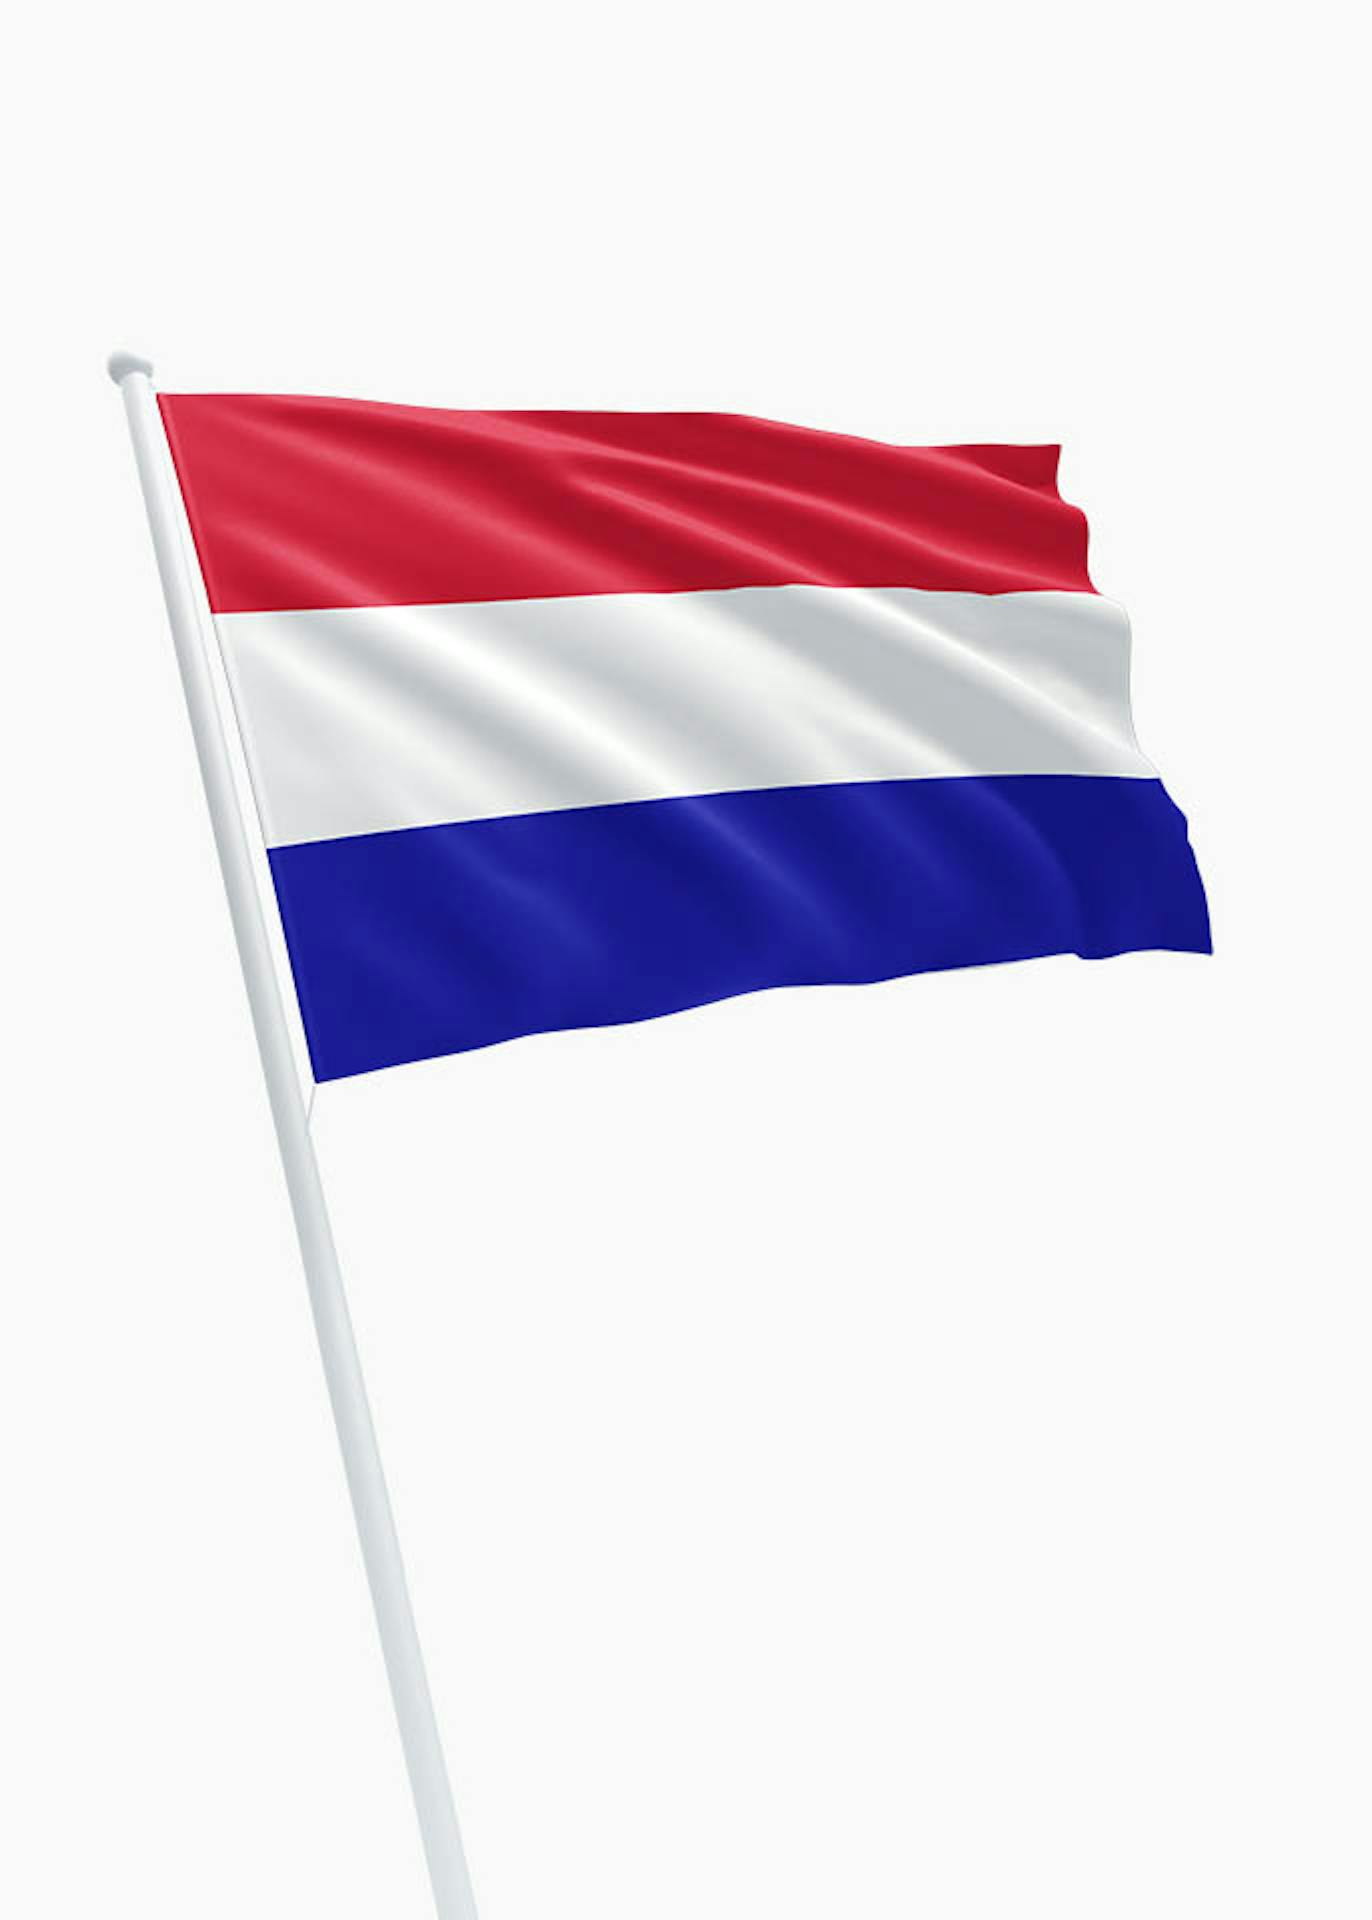 Vleien harpoen gewicht Nederlandse vlag kopen? Dé specialist in vlaggen! - DVC